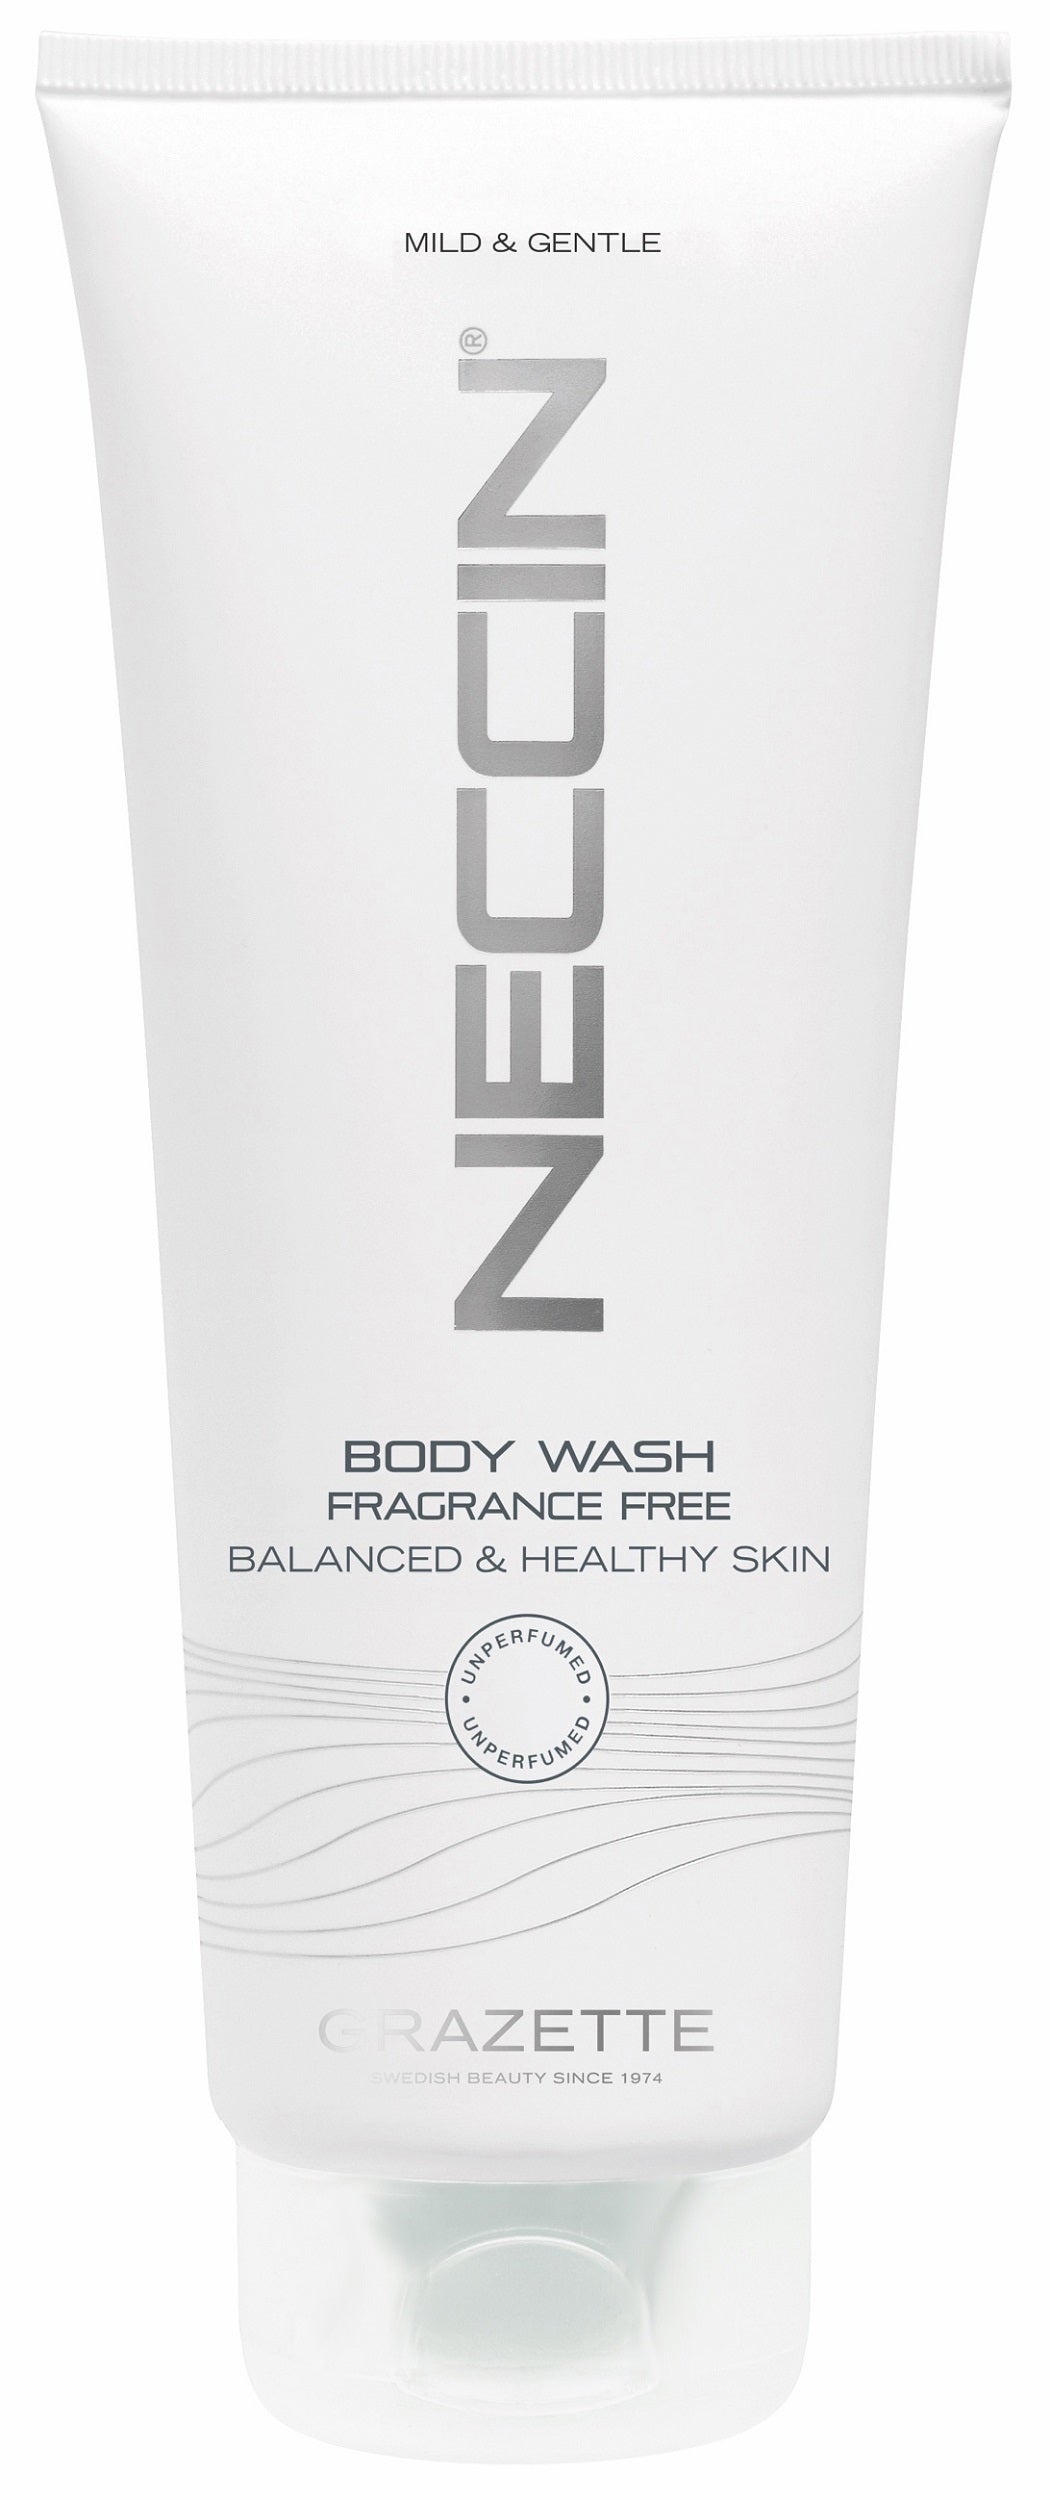 Neccin Body wash Fragrance free